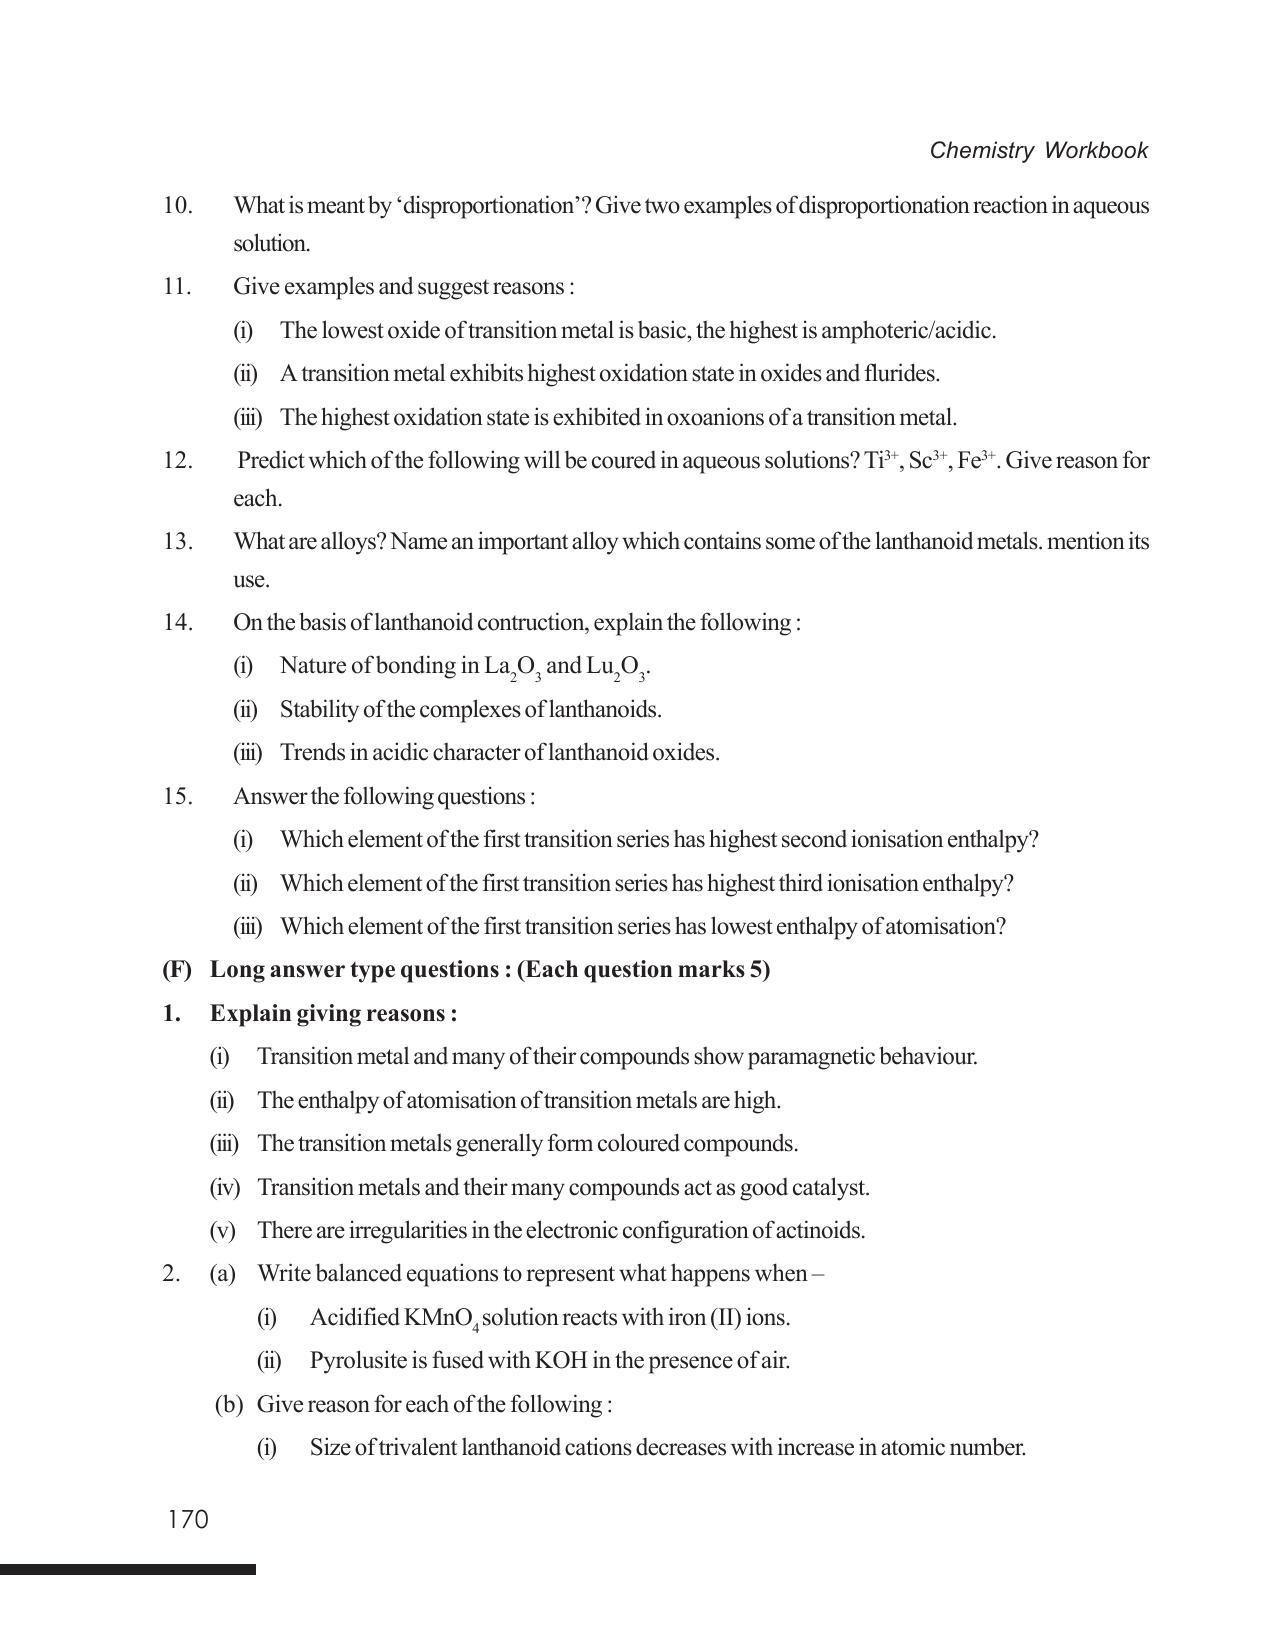 Tripura Board Class 12 Chemistry English Version Workbooks - Page 176